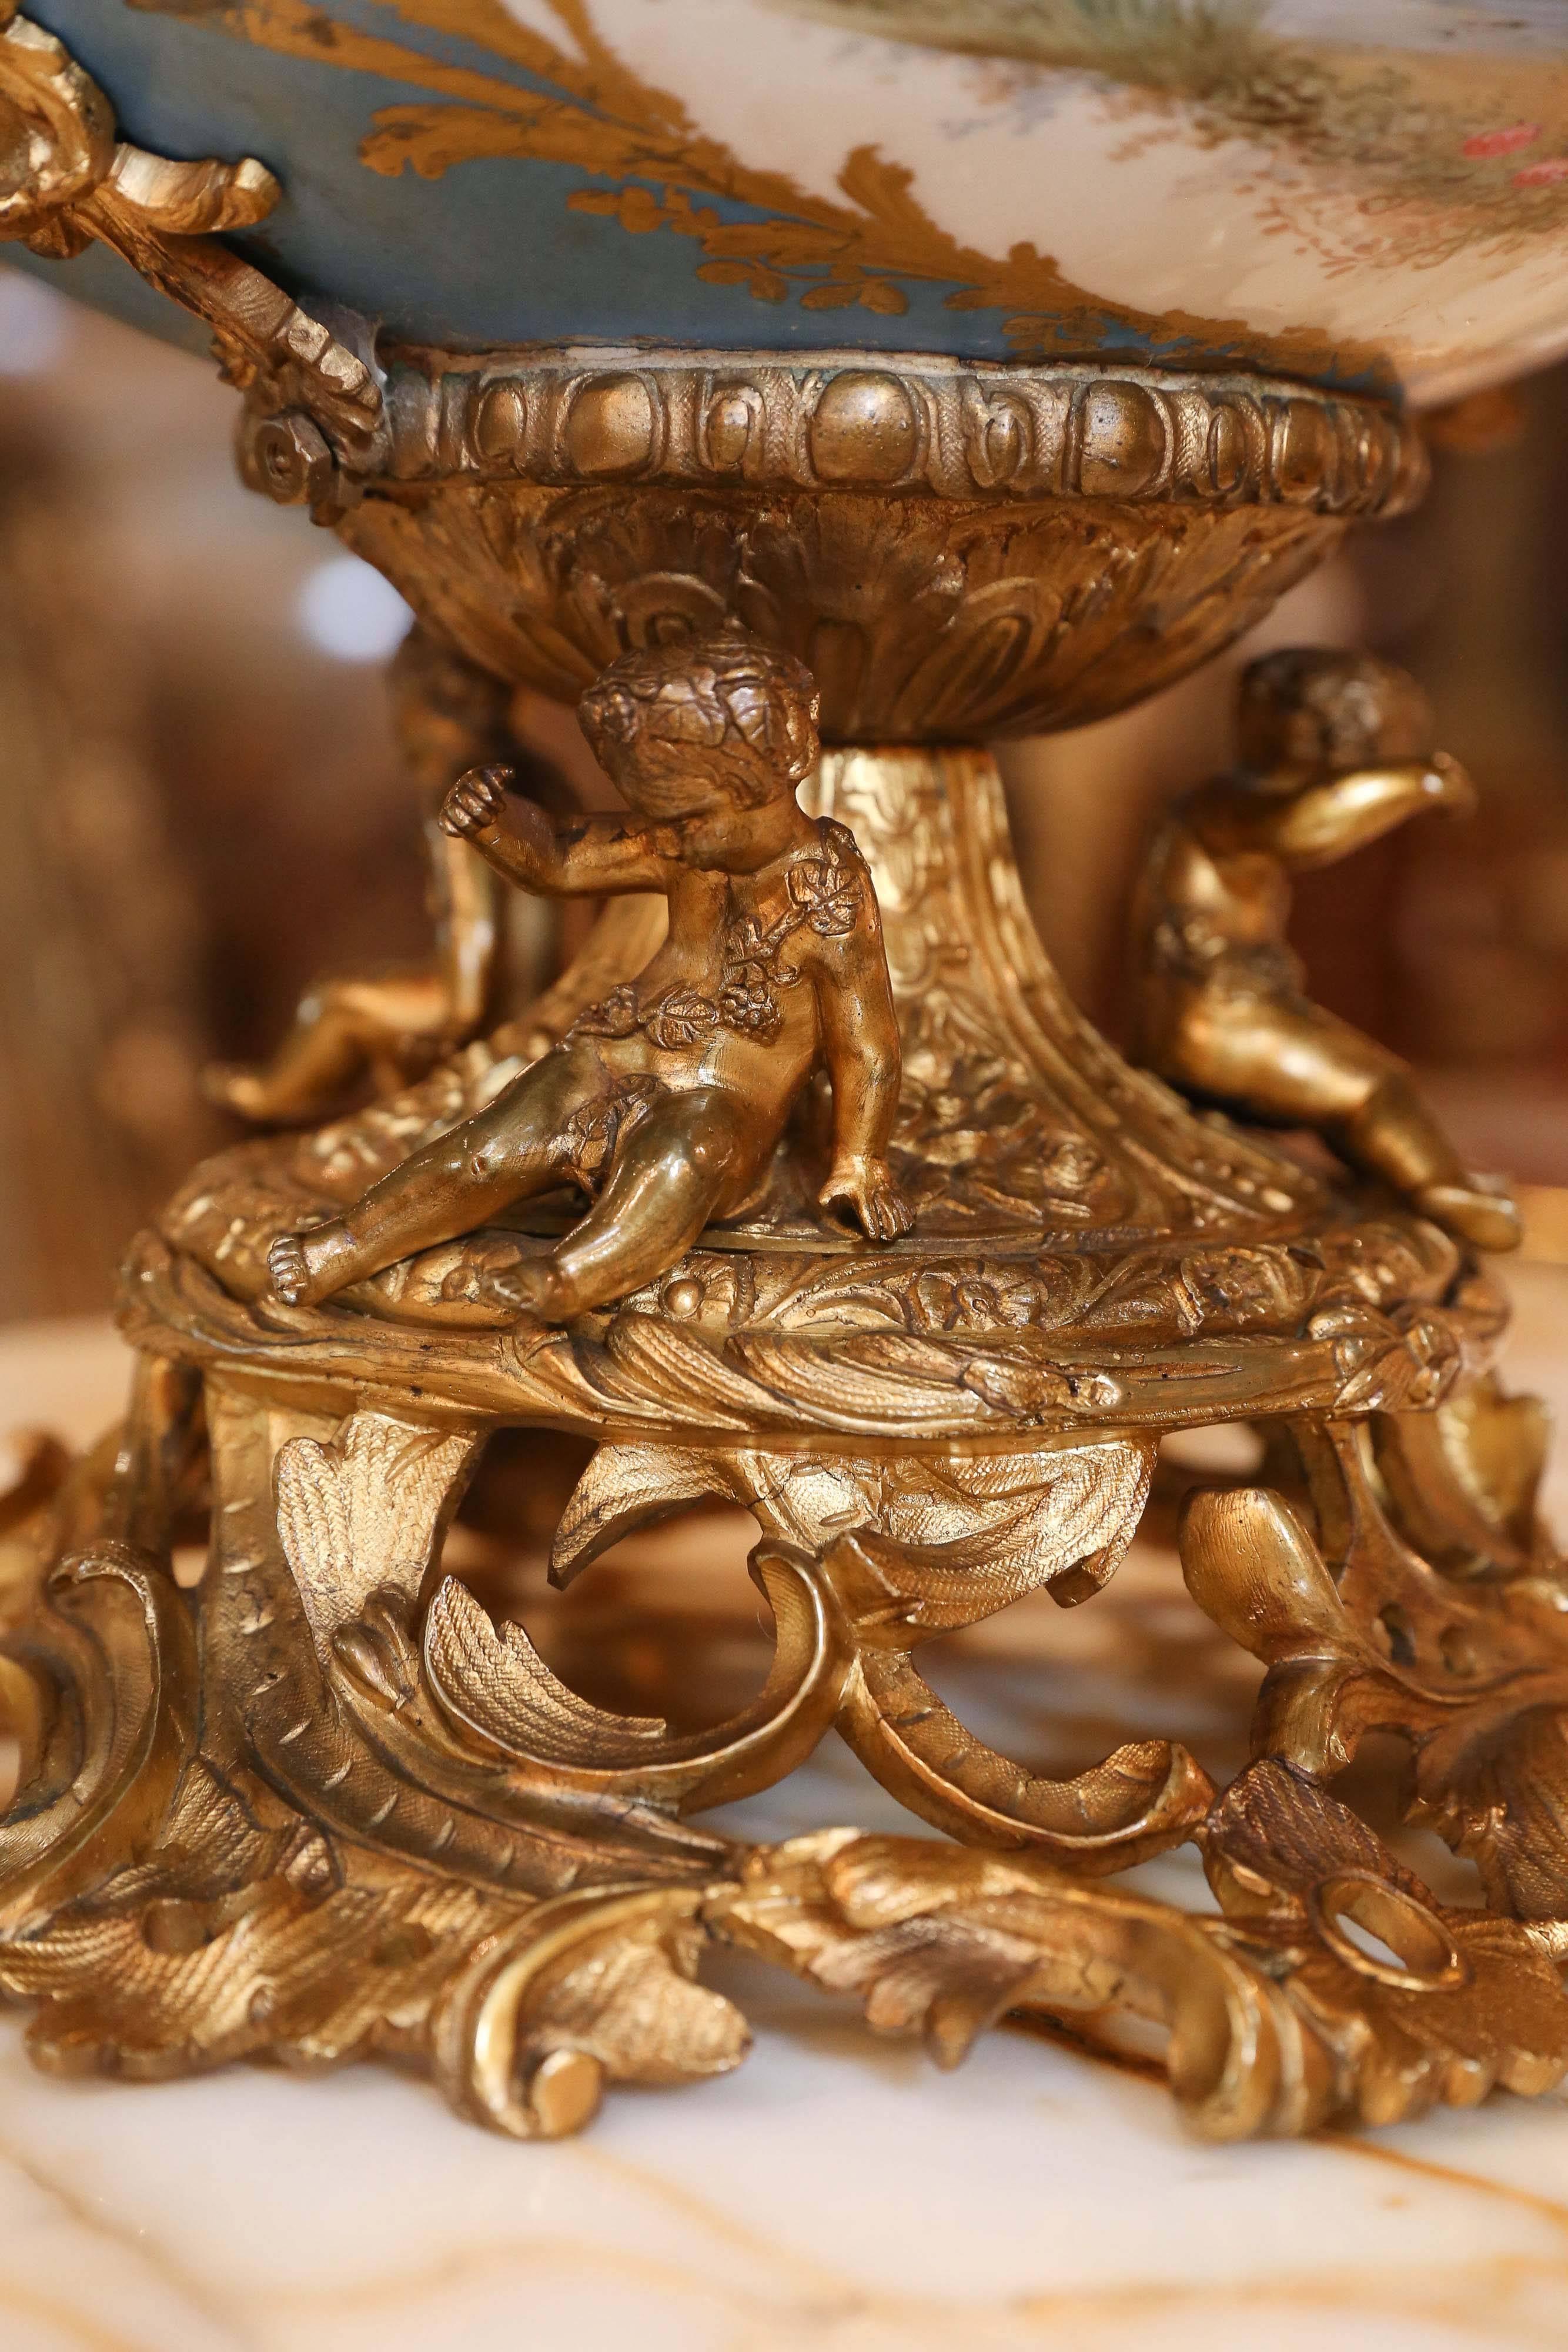 19th Century Large Sevres Style Centrepiece Bowl with Bronze Dore Mounts / Celeste Blue